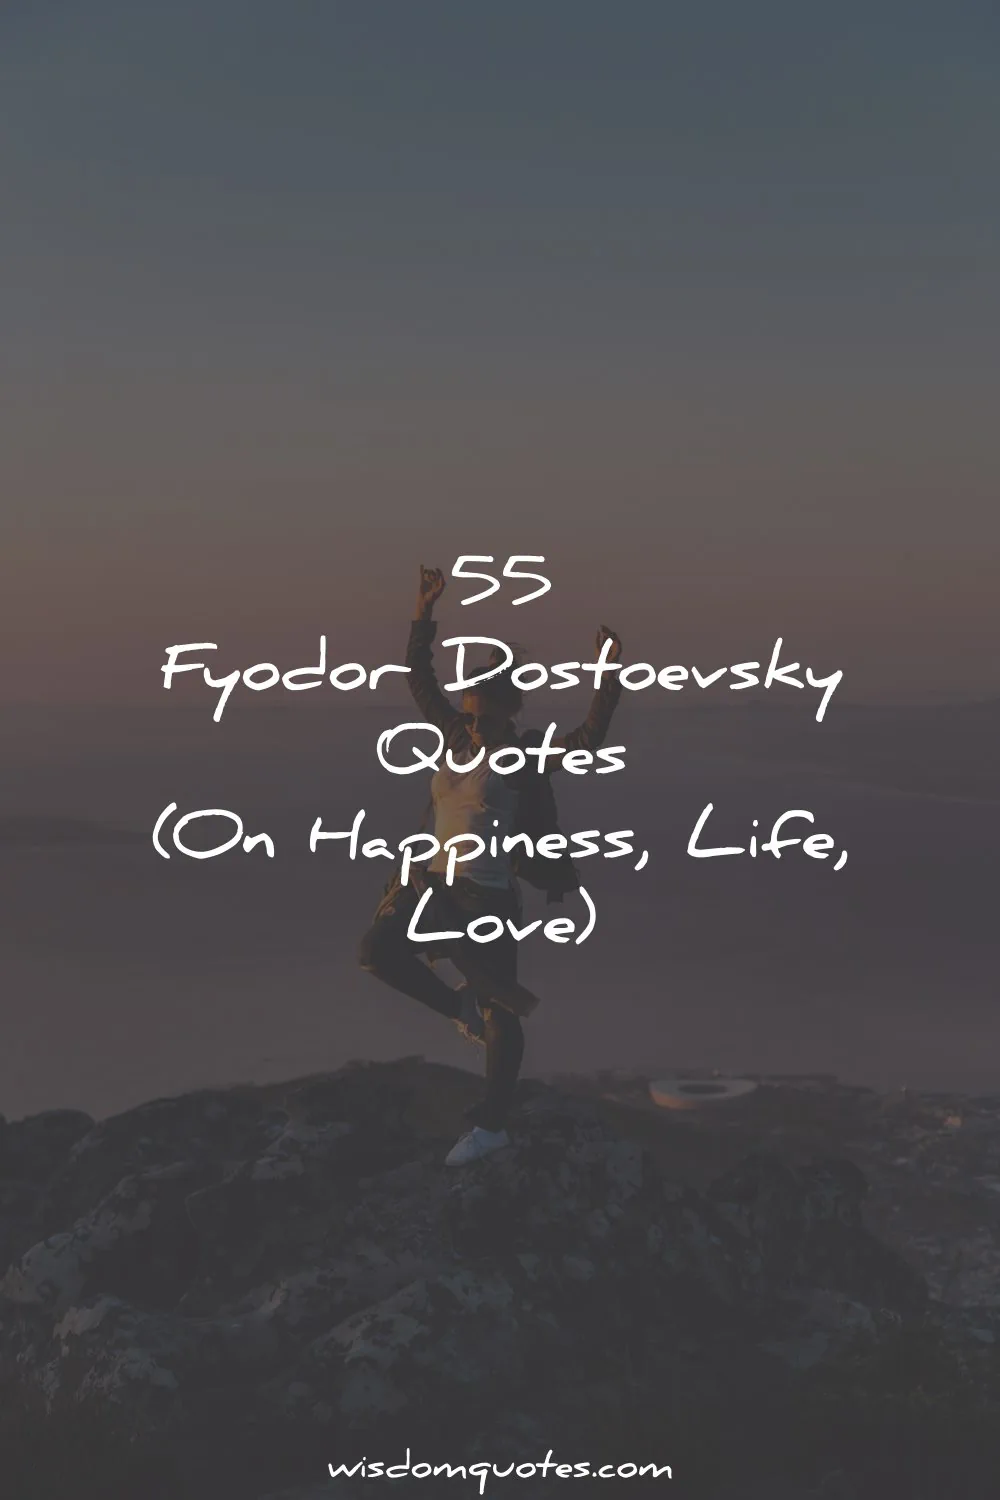 fyodor dostoevsky quotes happiness life love wisdom